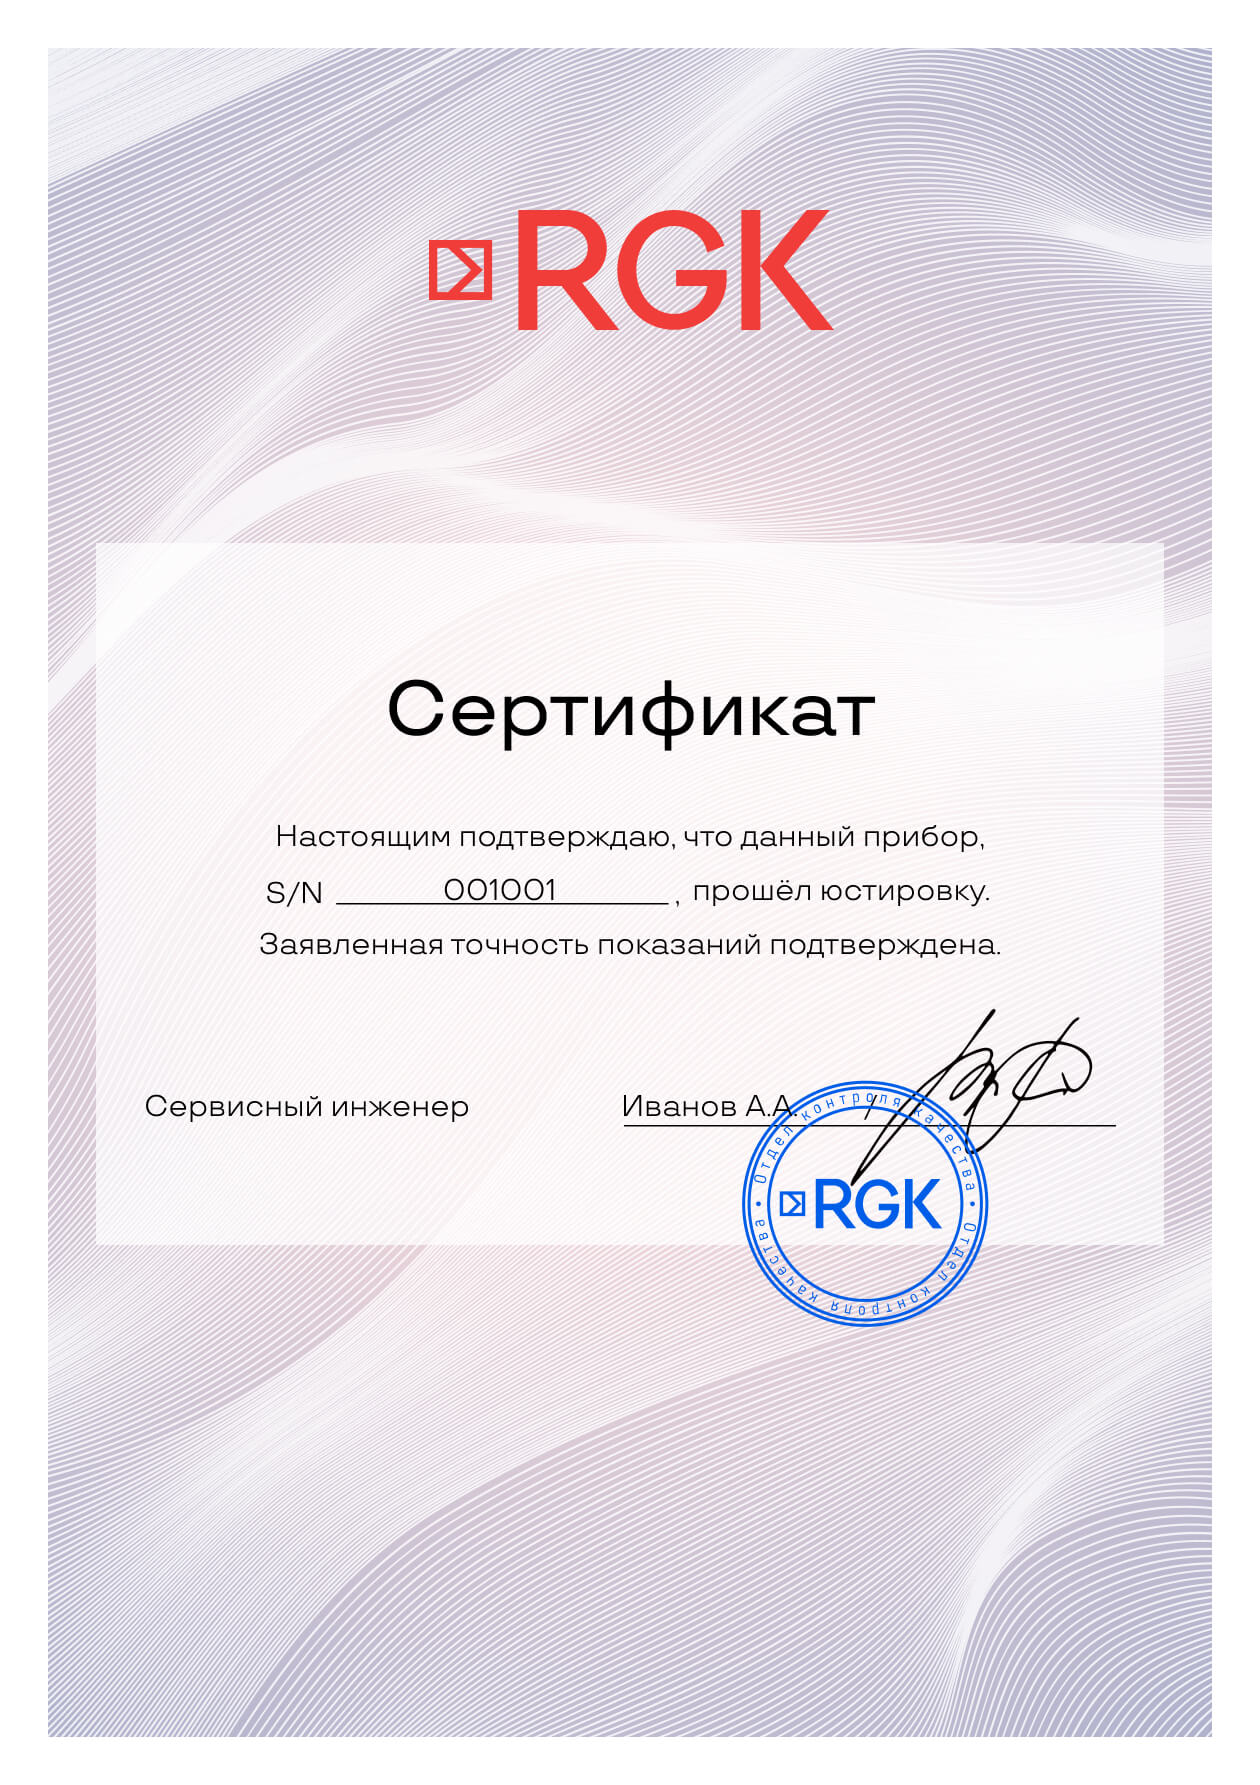 Сертификат RGK